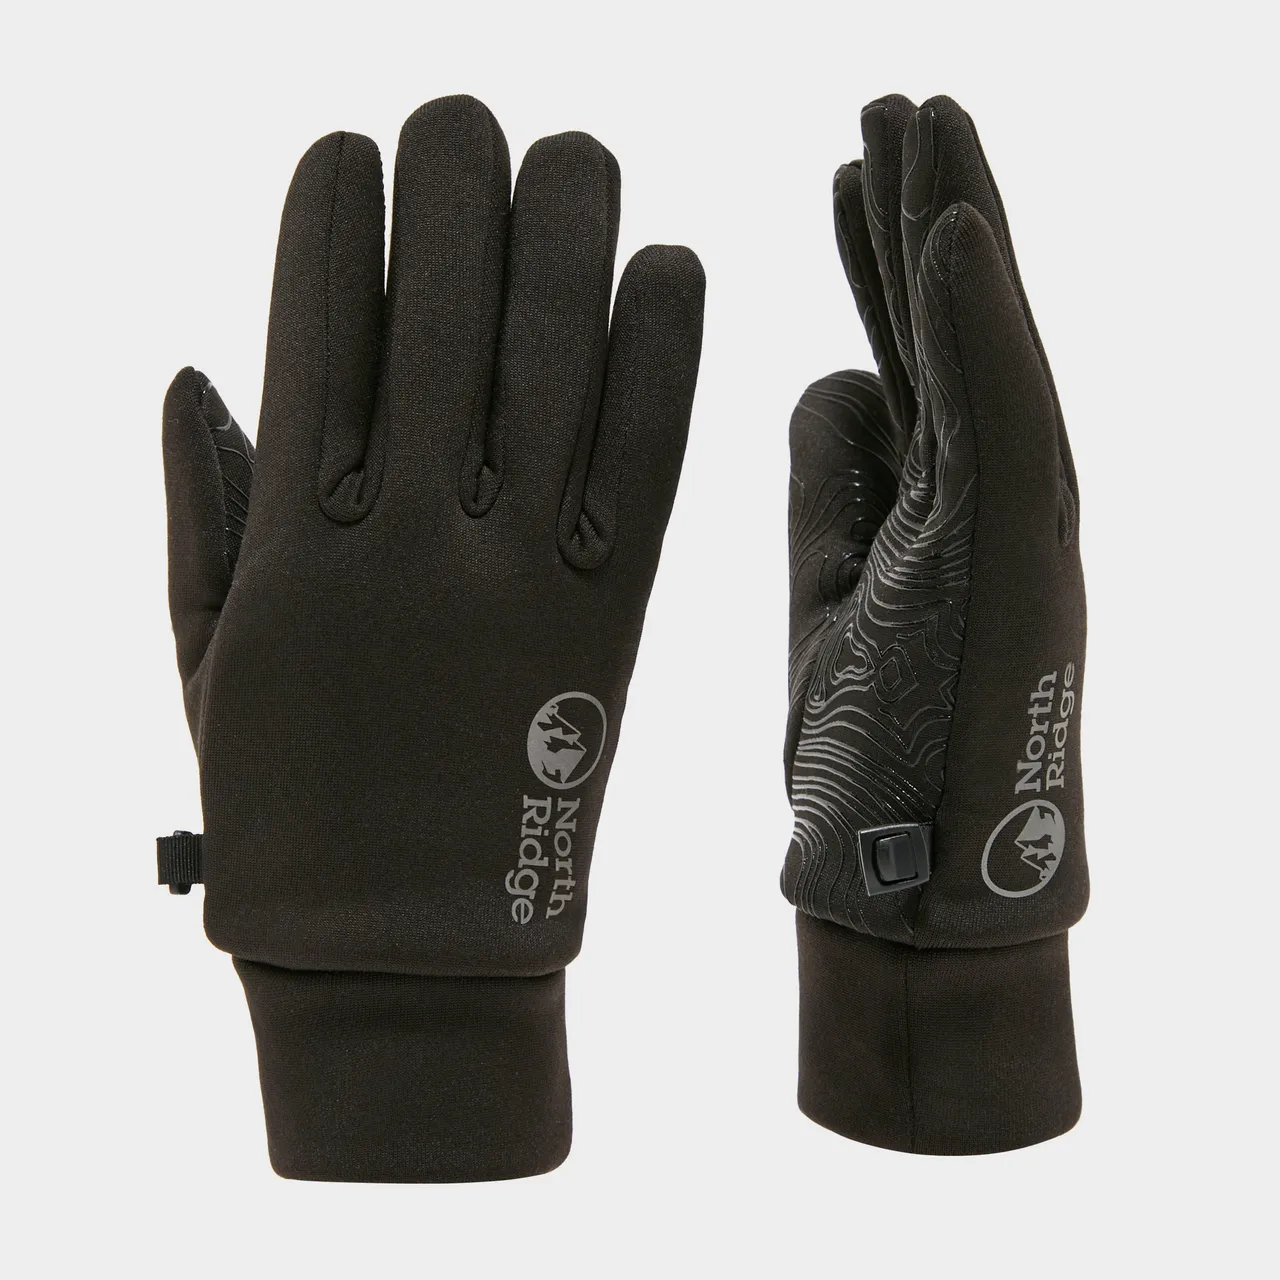 Women's Insulated Grip Glove, Black